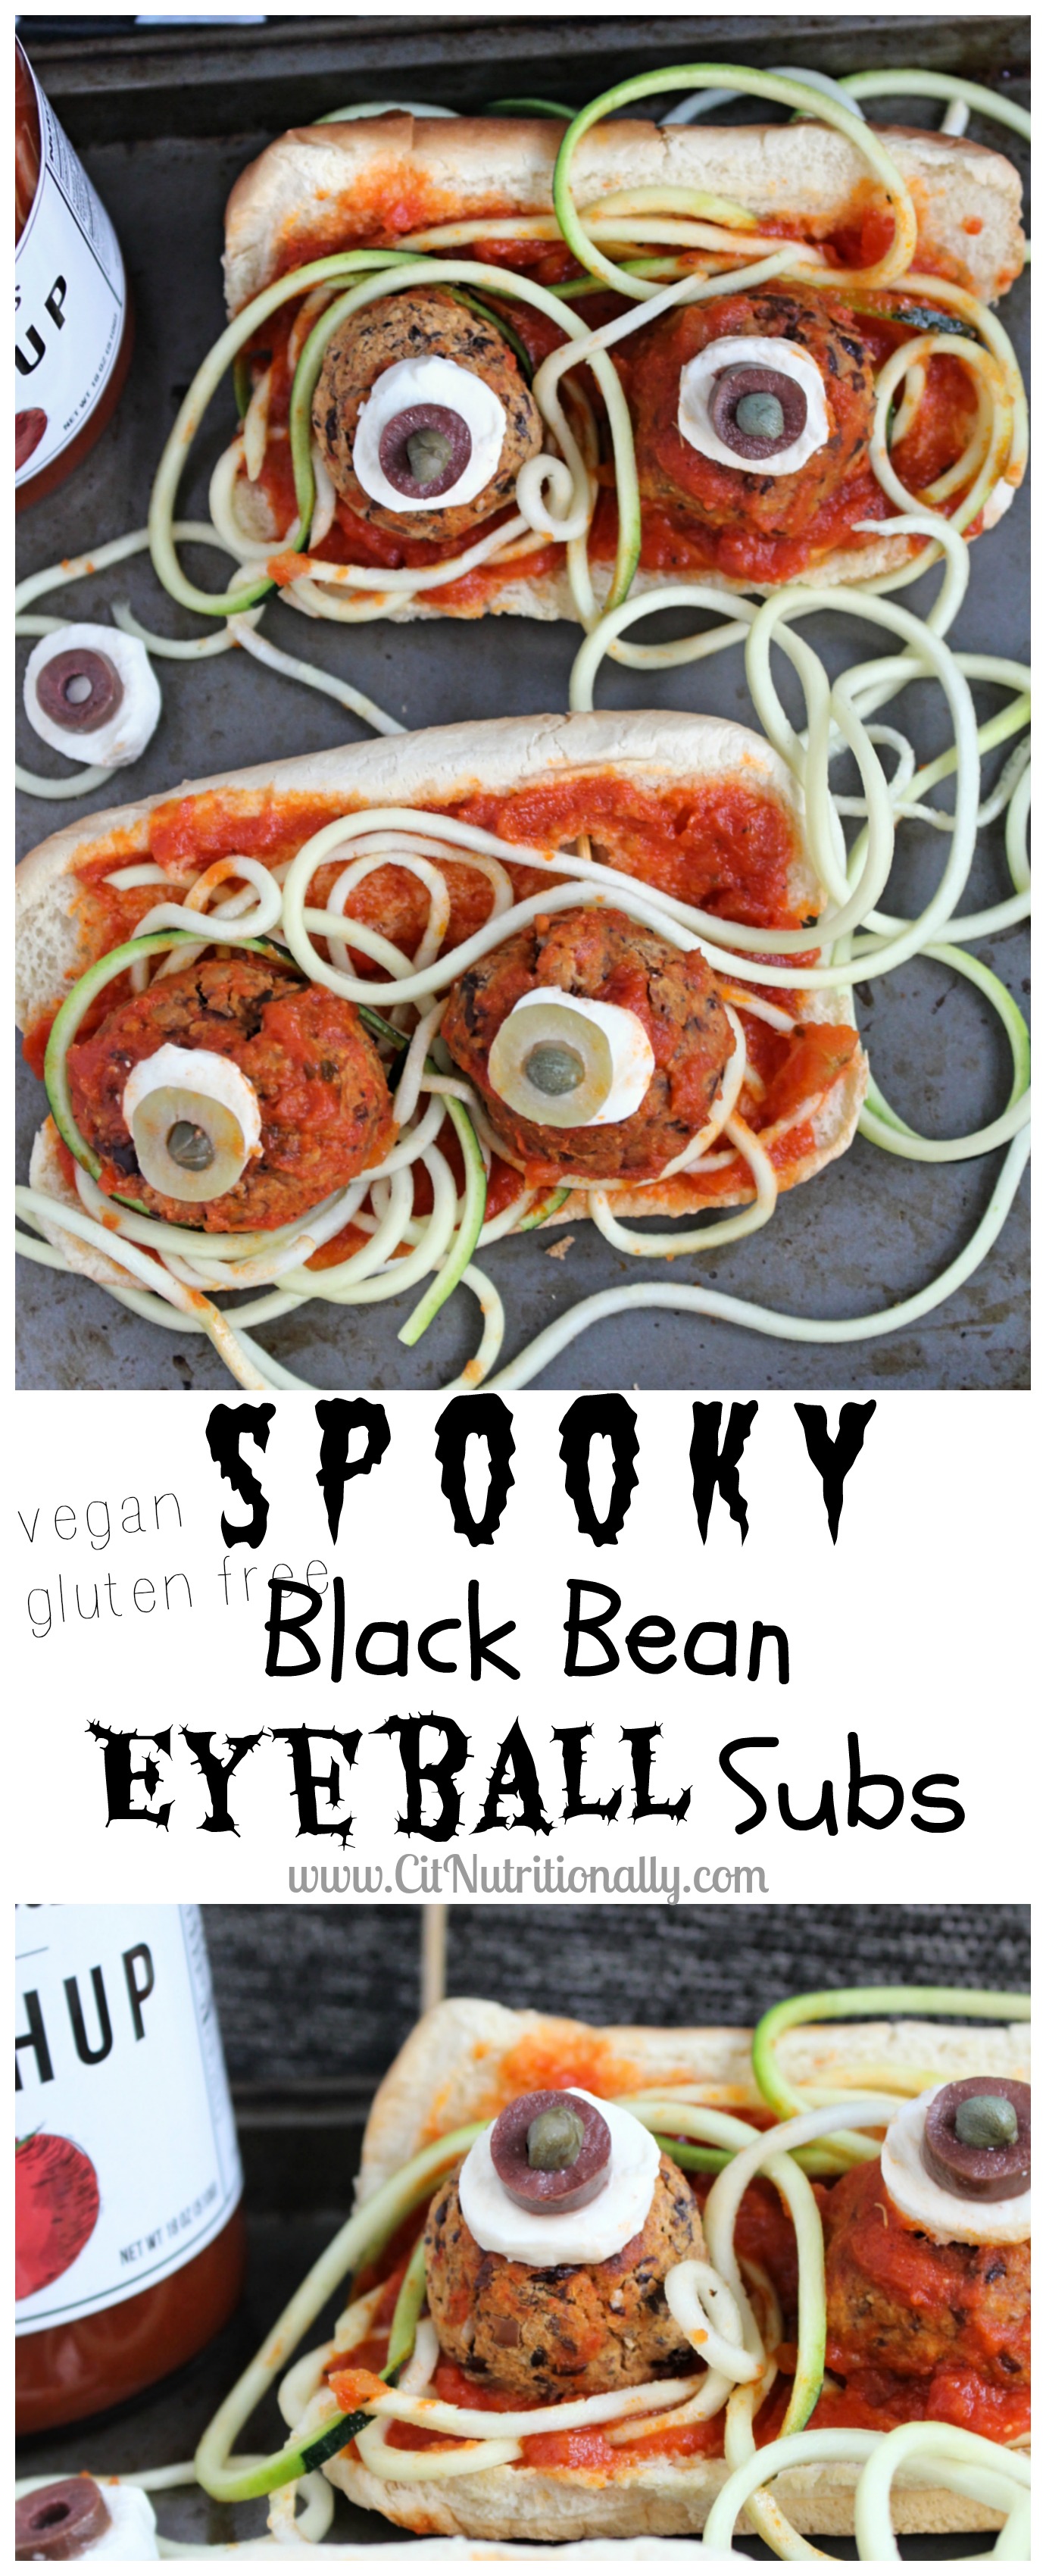 Spooky Black Bean Eyeball Subs | C it Nutritionally #sponsored 